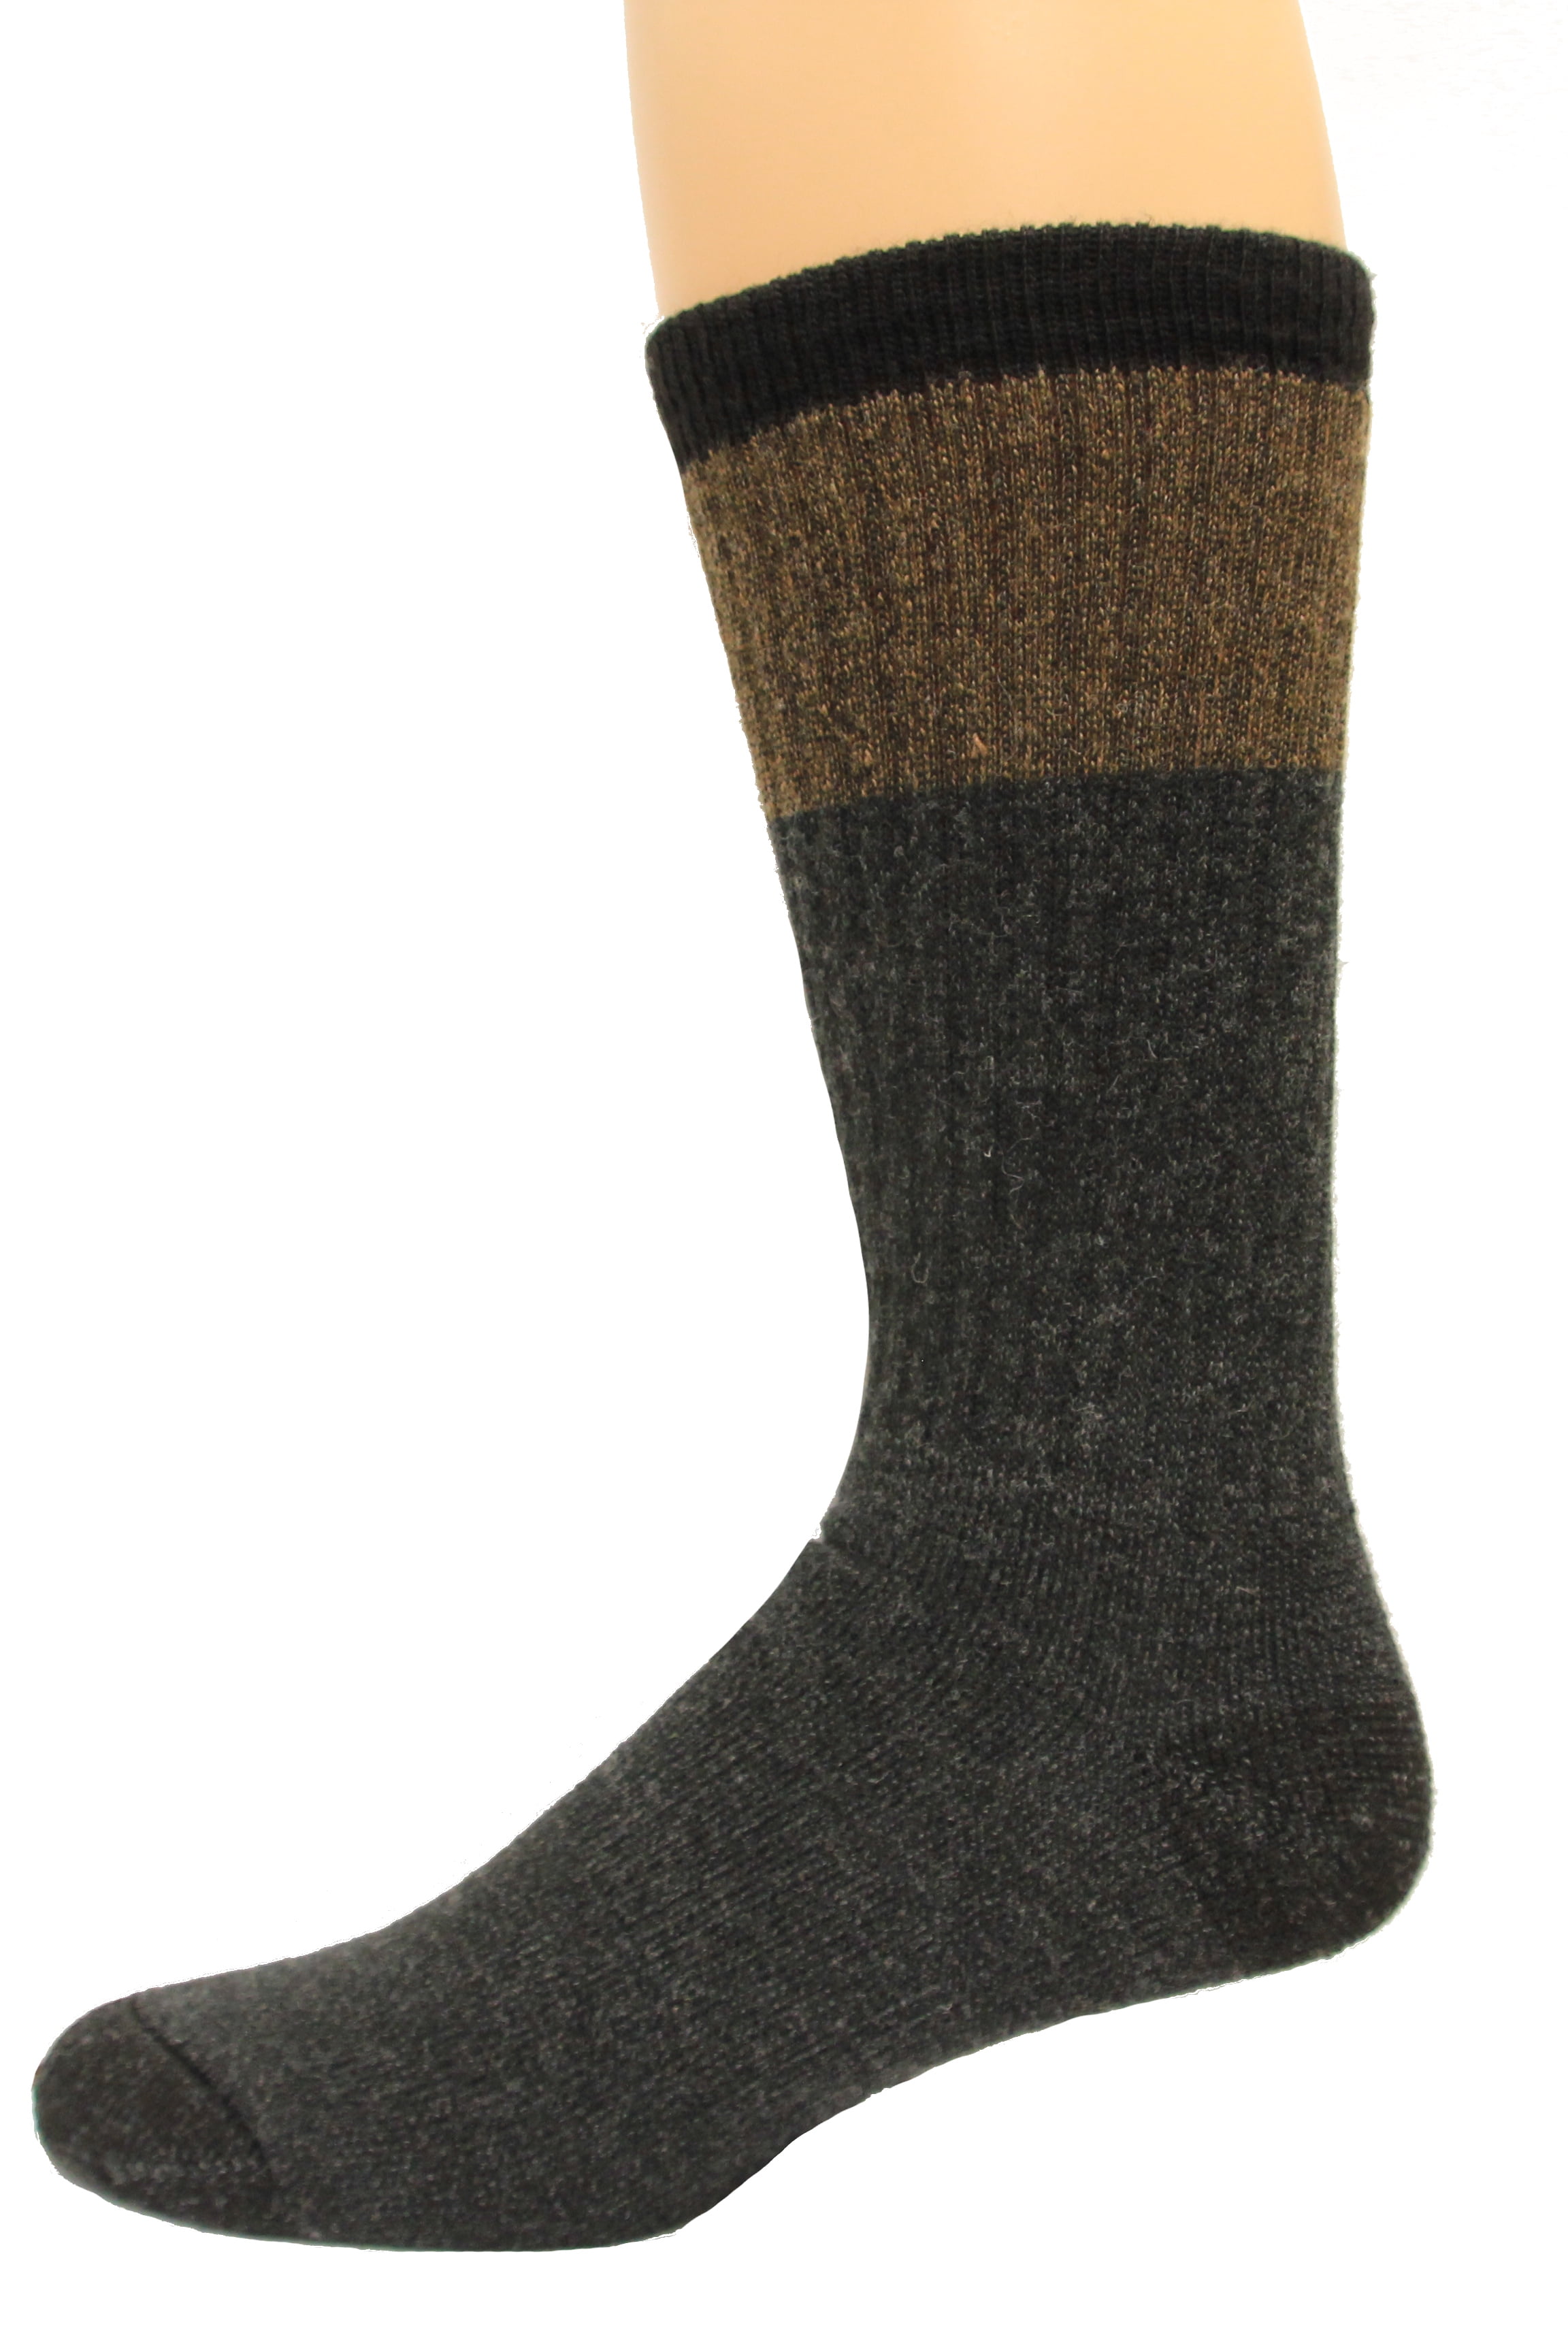 Medium Angora Striped Boot Black Fits 9-11 #9633 Wise Blend Socks 